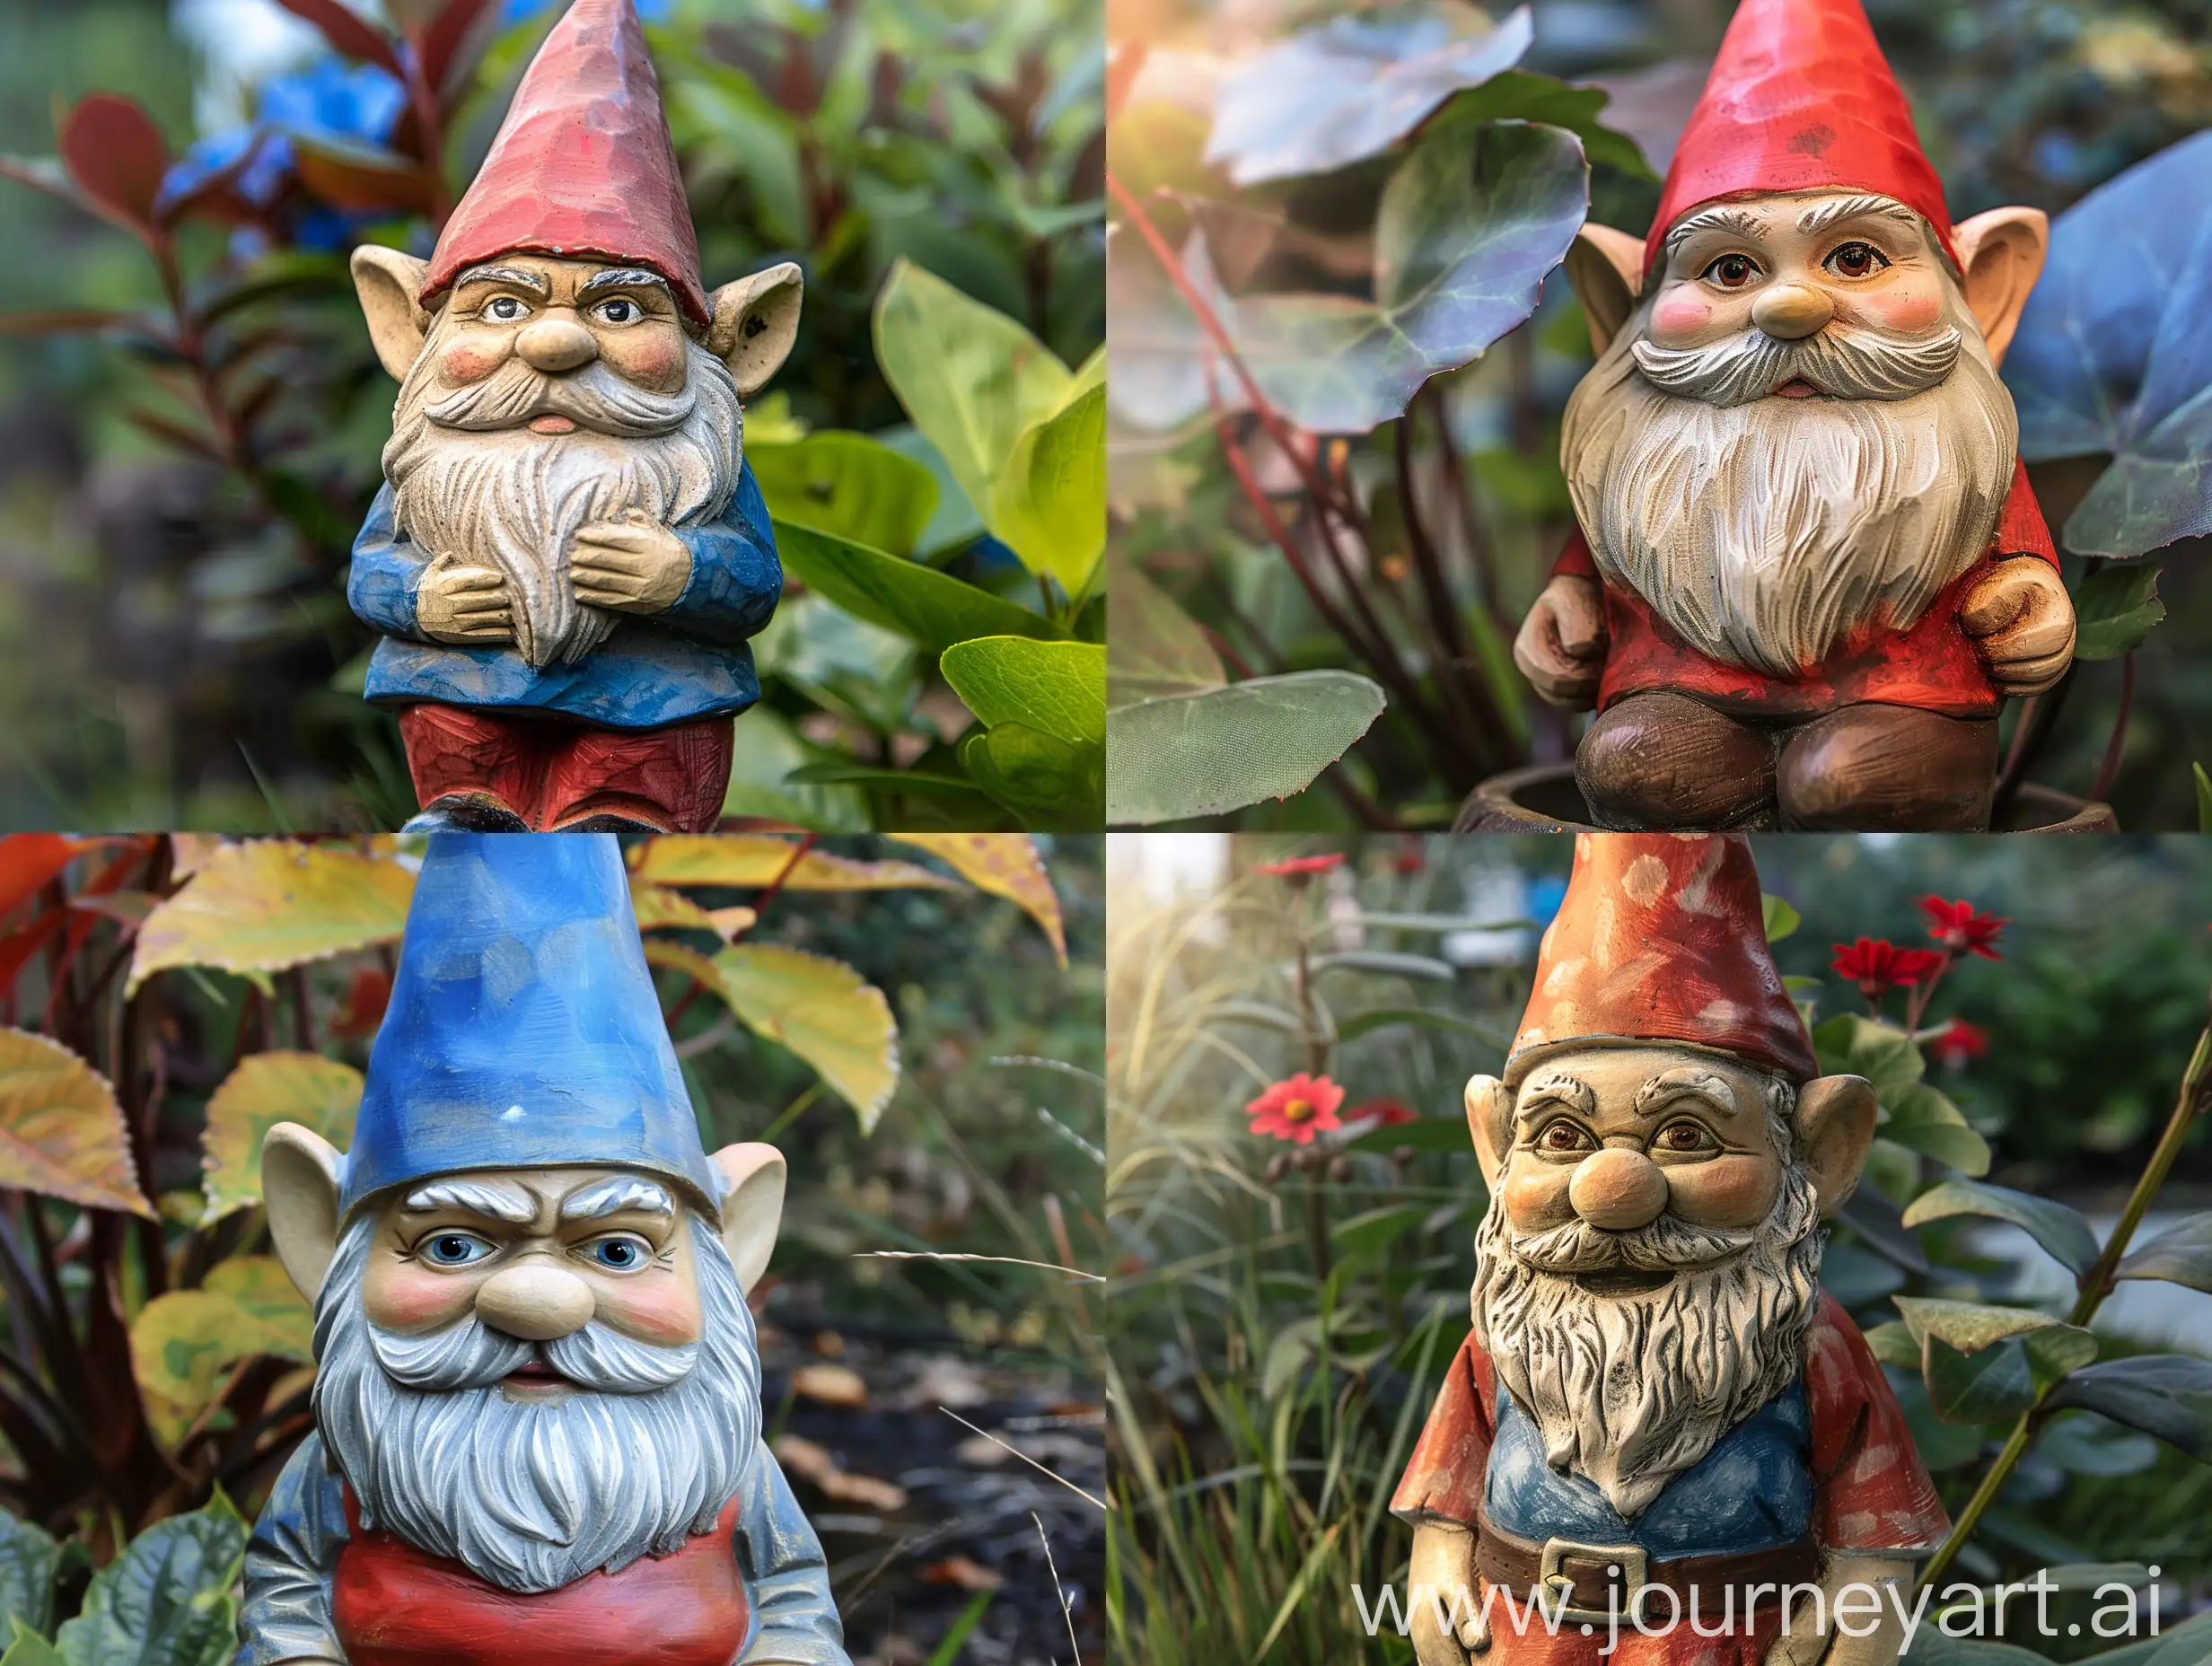 Mischievous-Classic-Garden-Gnome-Named-Gary